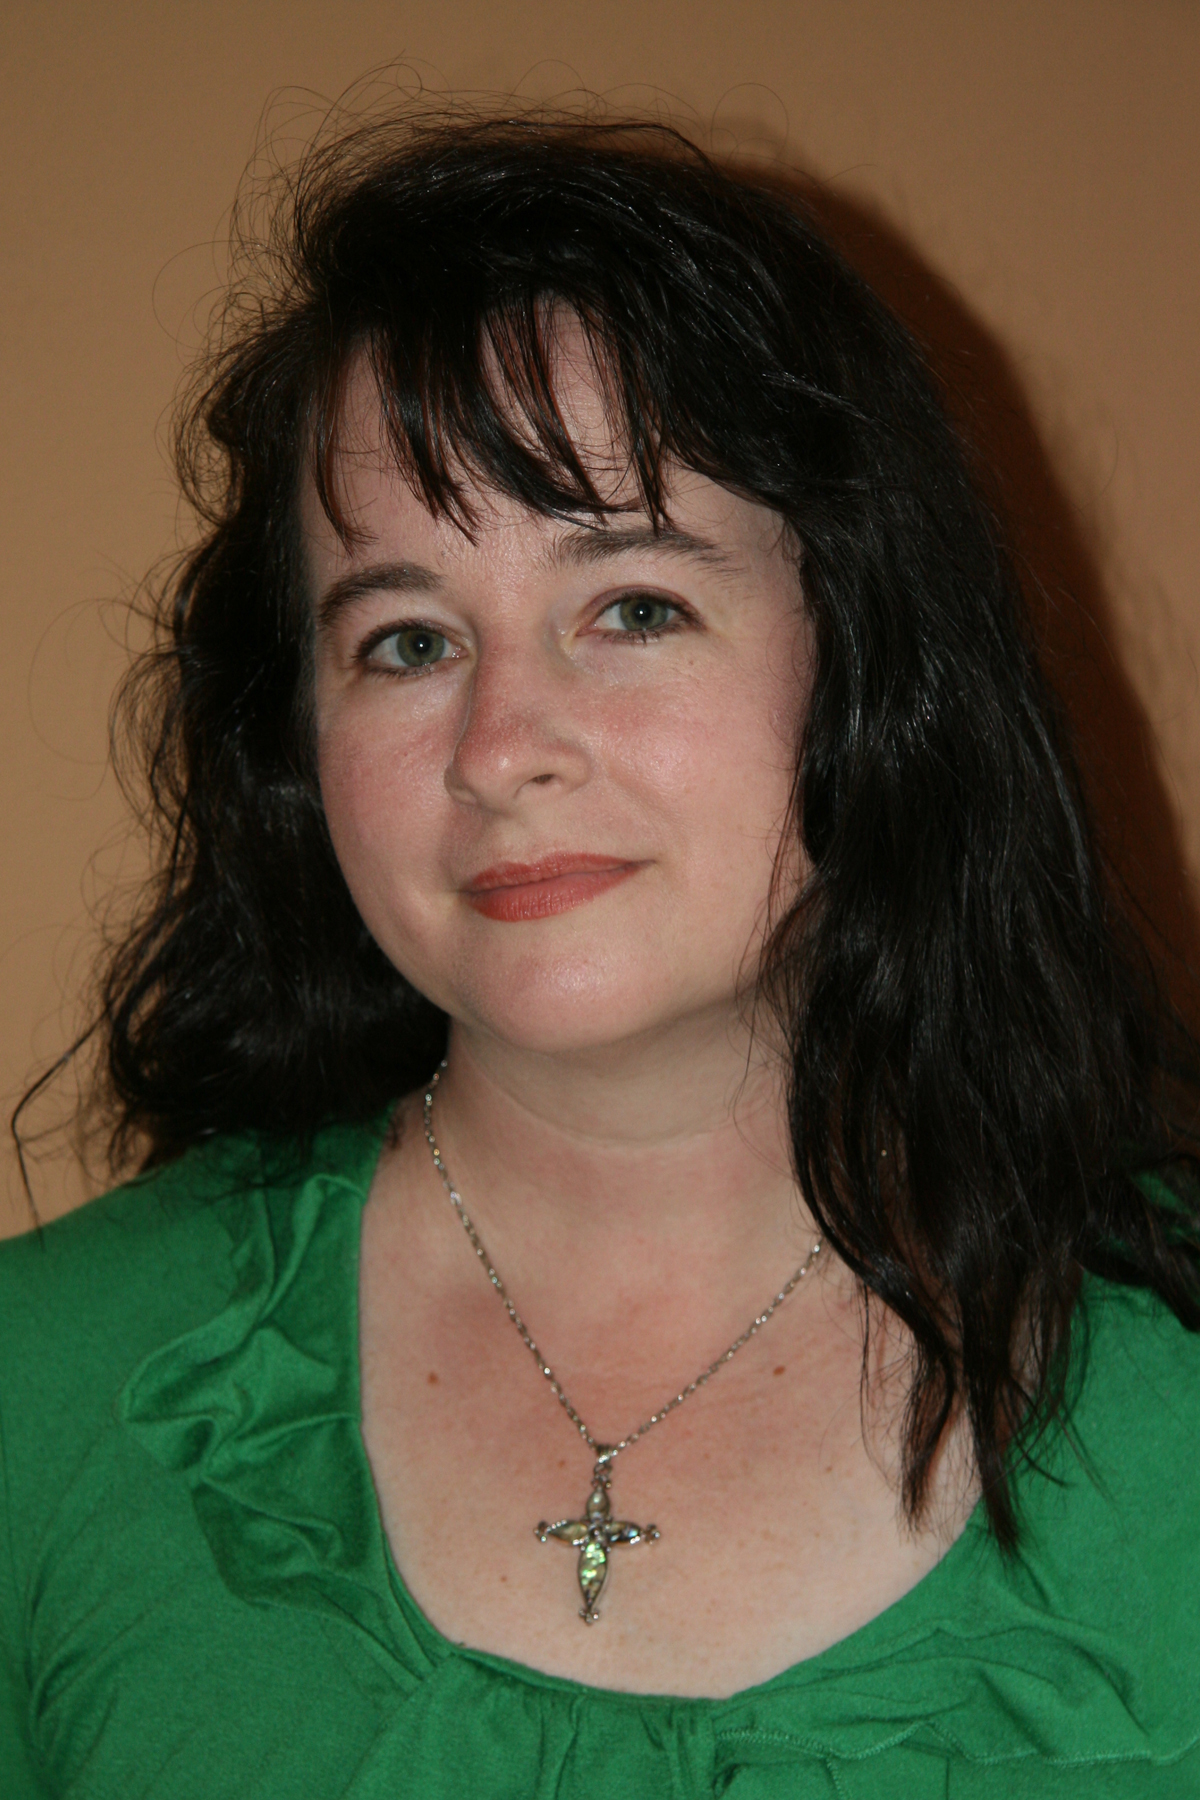 Author Natalie Buske Thomas